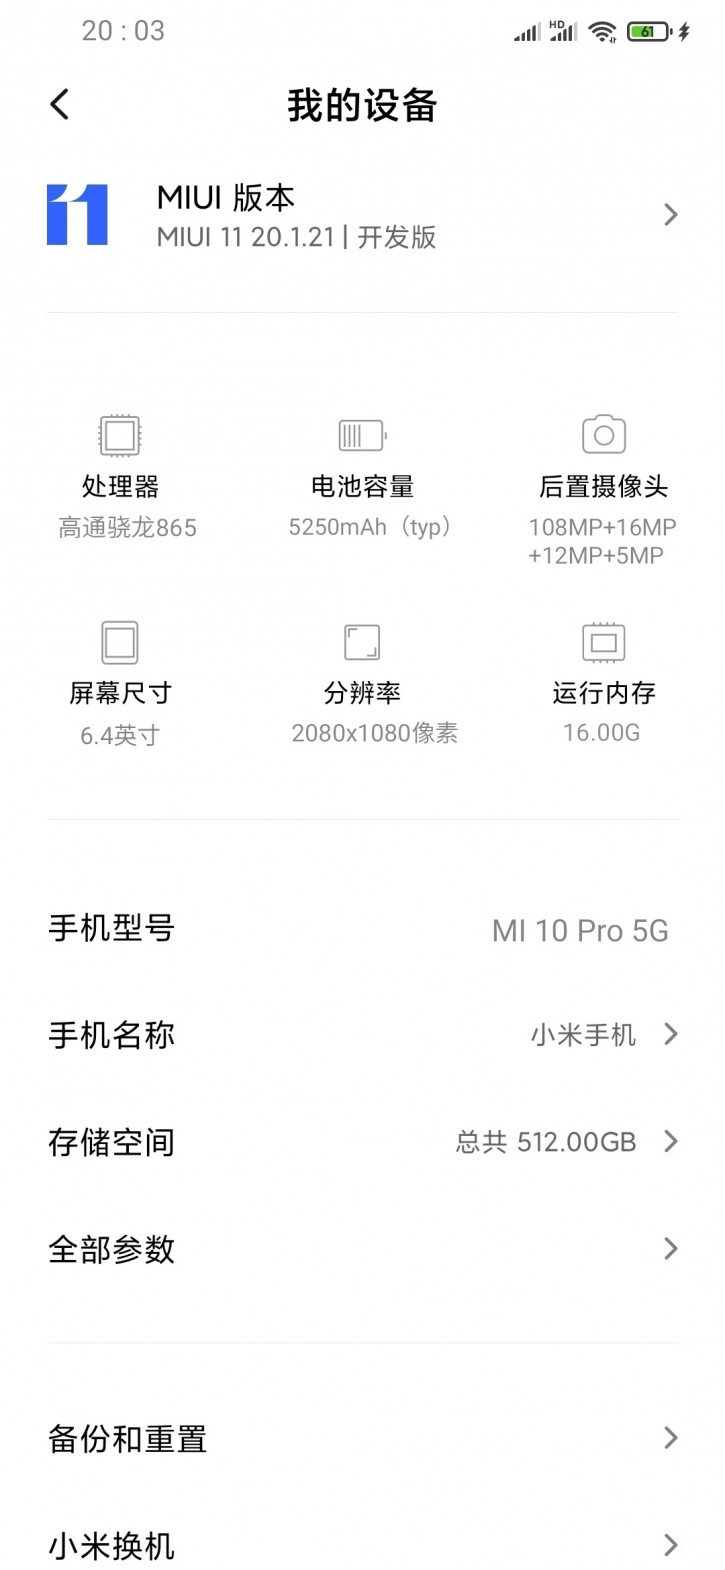 MIUI 11 для Xiaomi Mi 10 Pro 5G показала ВСЕ характеристики: фейк?